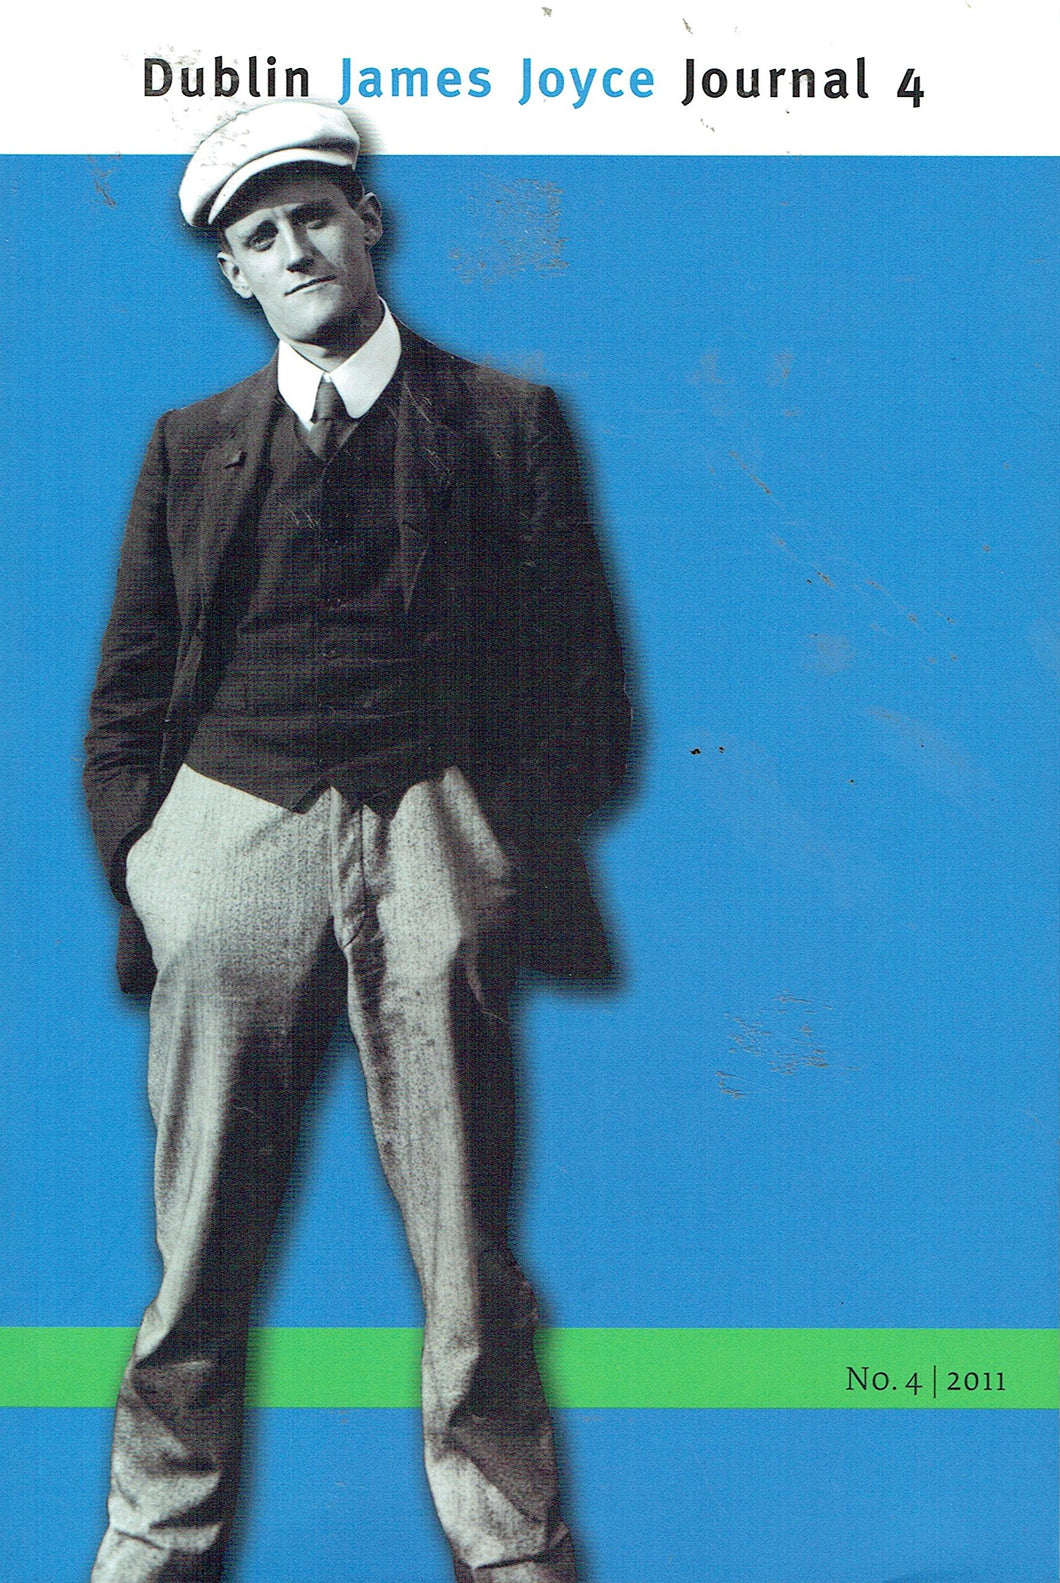 Dublin James Joyce Journal - No. 4, 2011